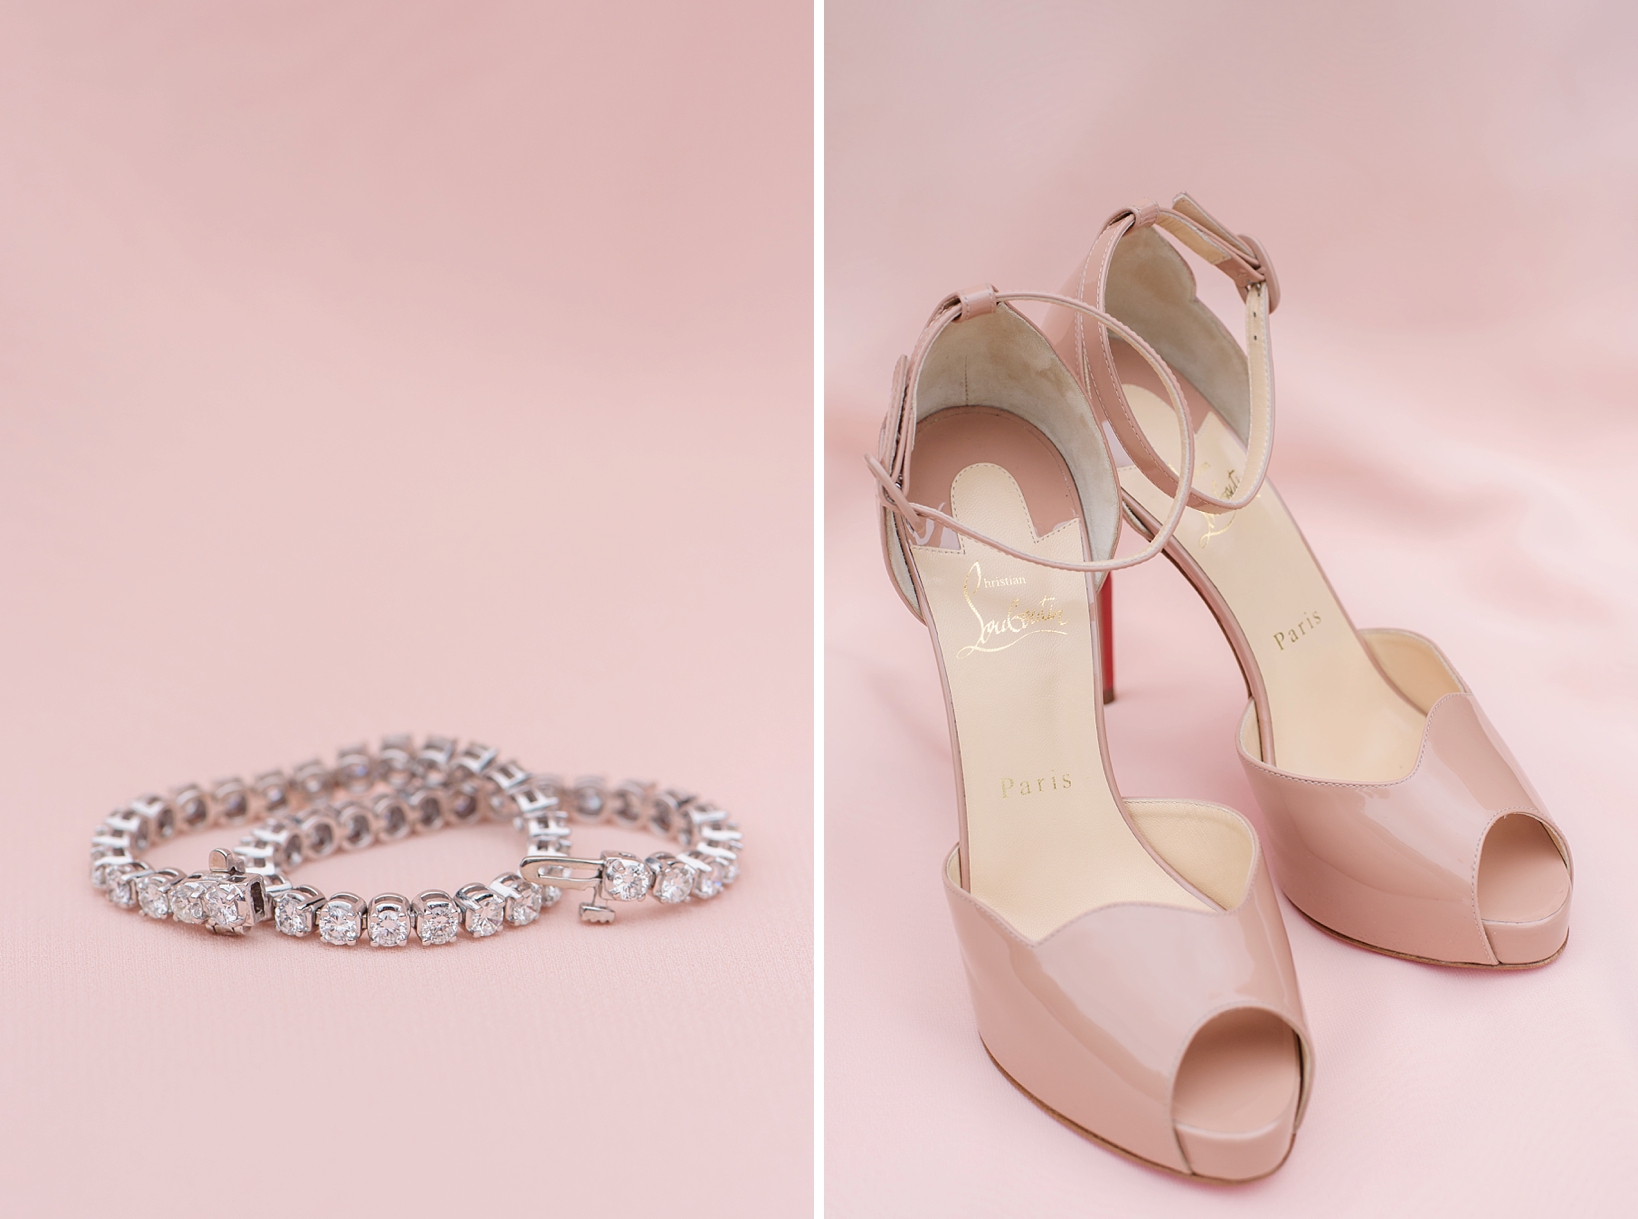 Diamond bracelet and Christian Louboutin heels against a blush background